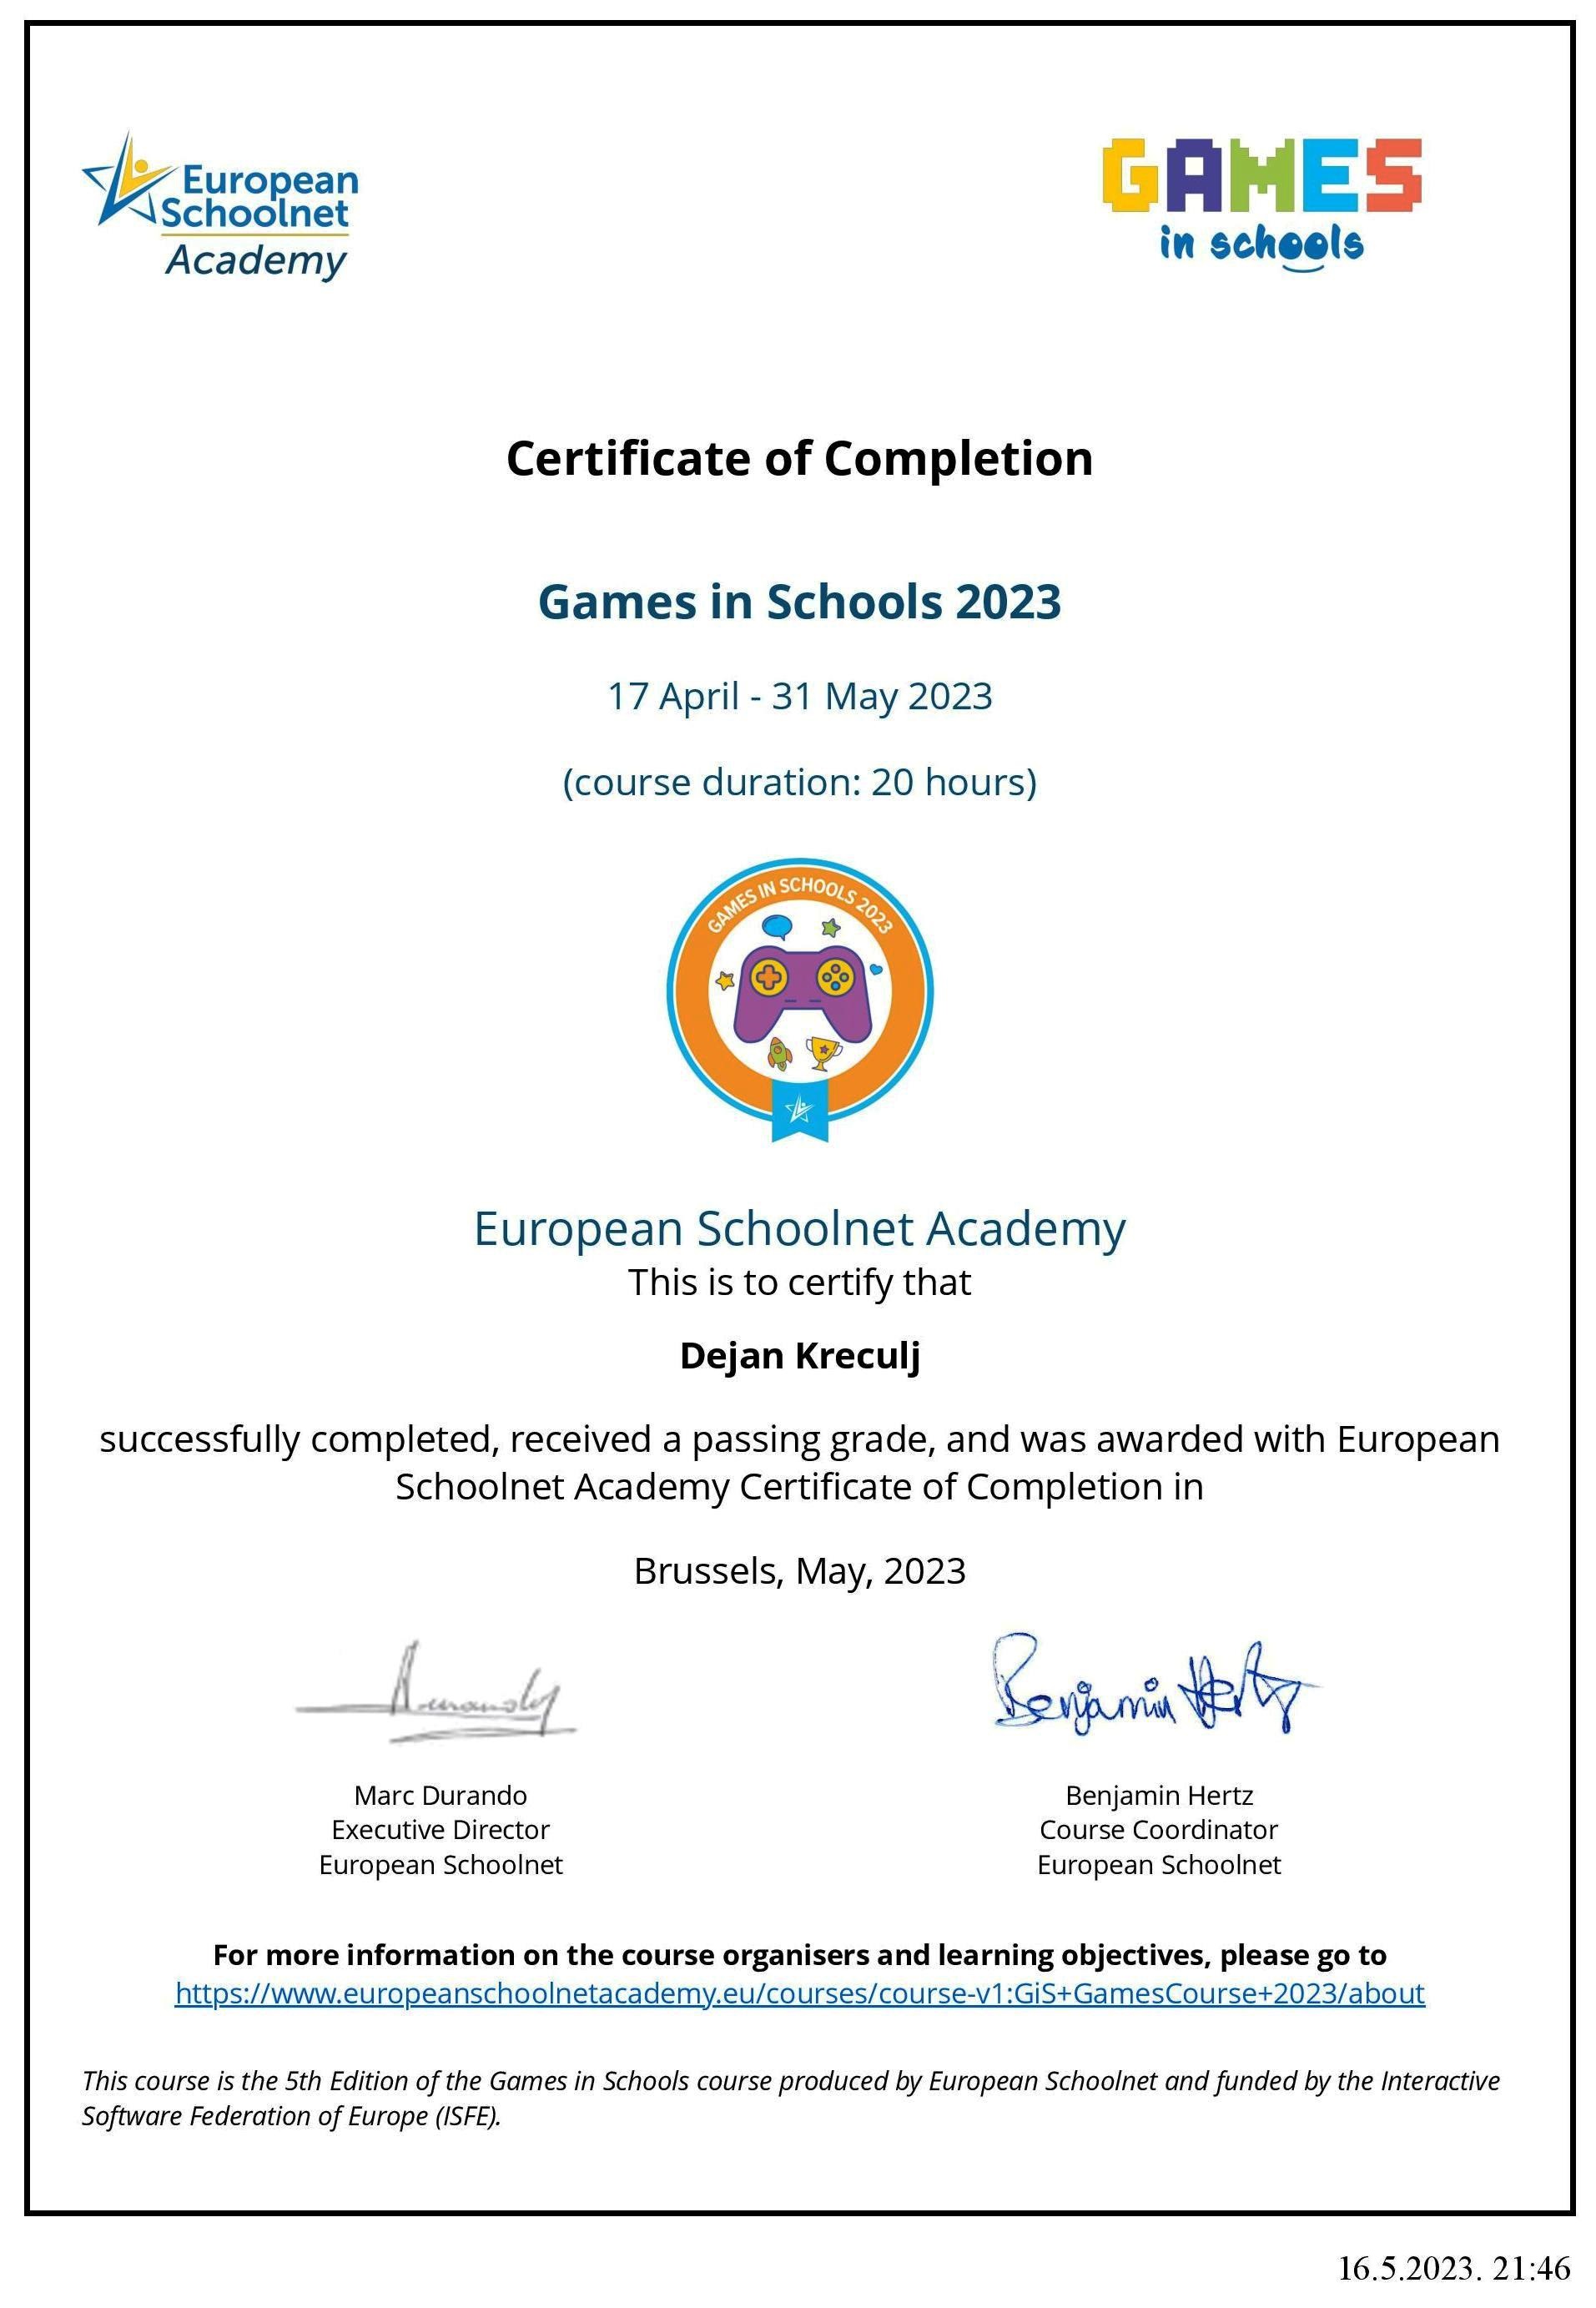 EUN GamesCourse Certificate European Schoolnet Academy page 001